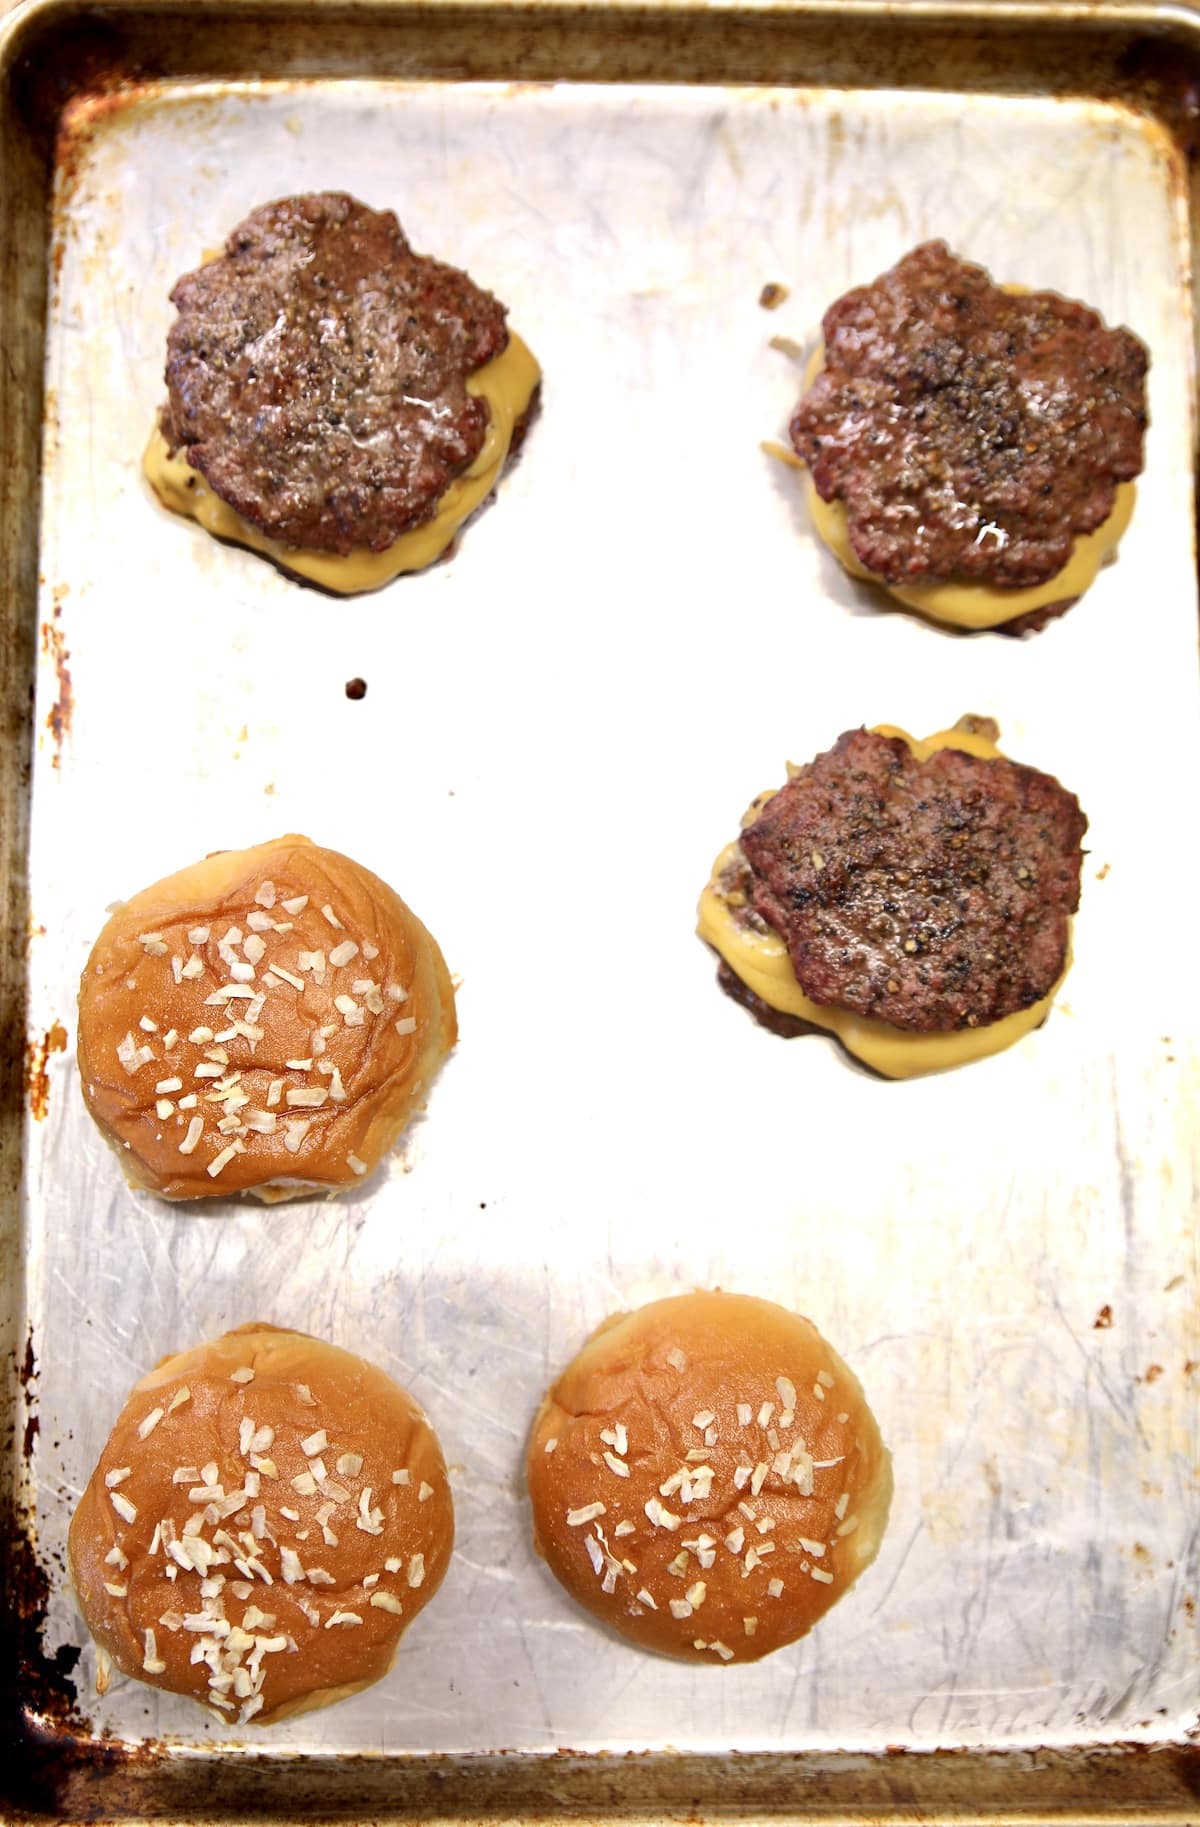 Sheet pan with grilled burgers, buns.